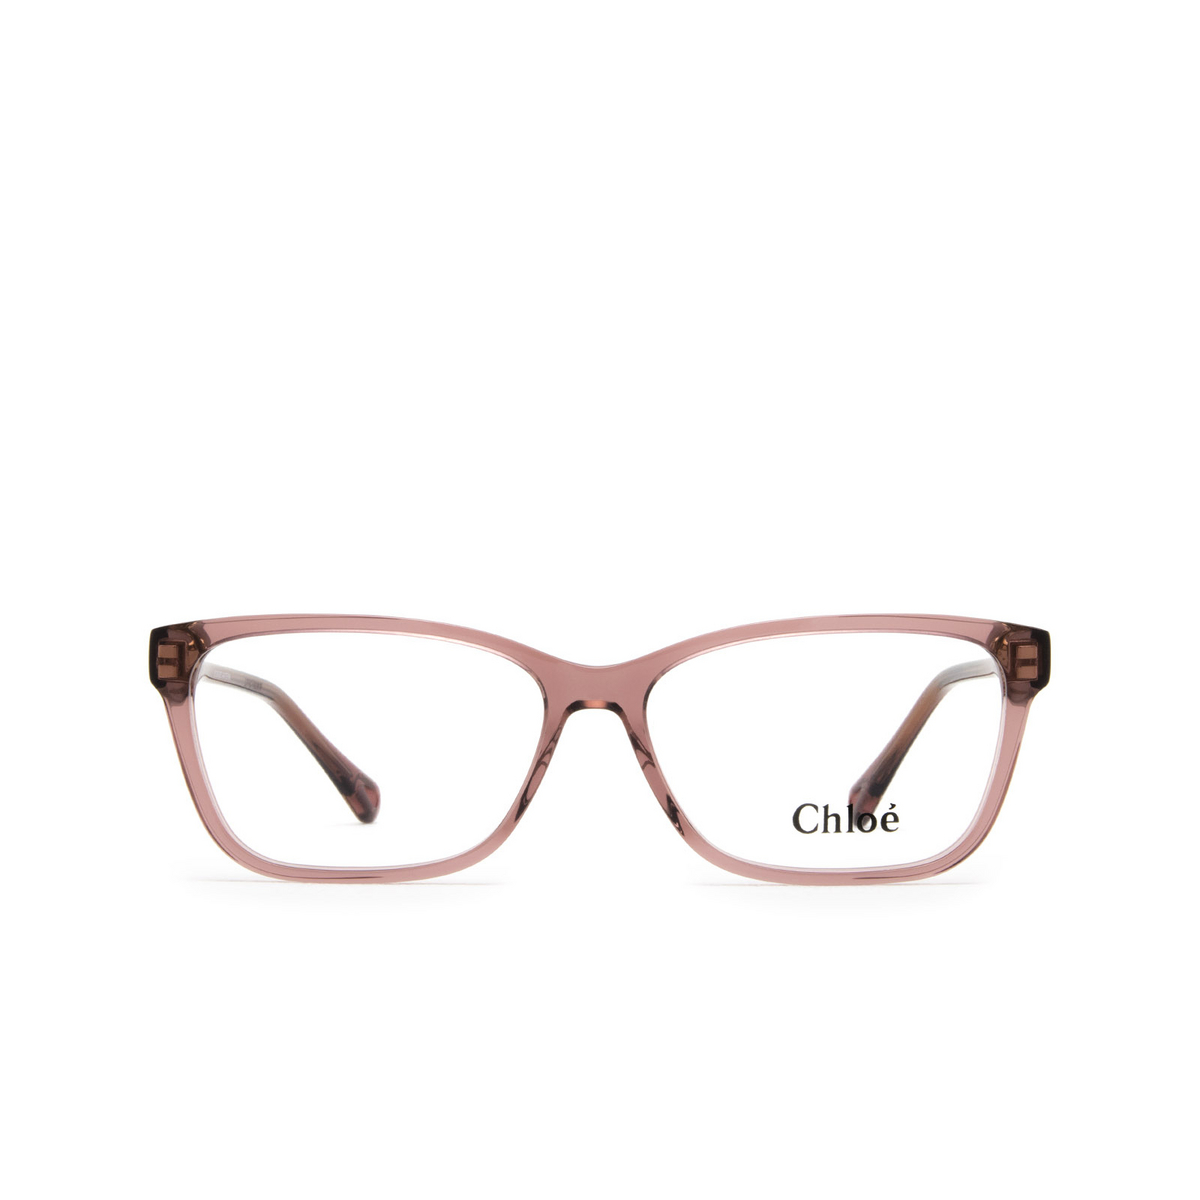 Chloé® Rectangle Eyeglasses: CH0116O color Transparent Pink 008 - front view.